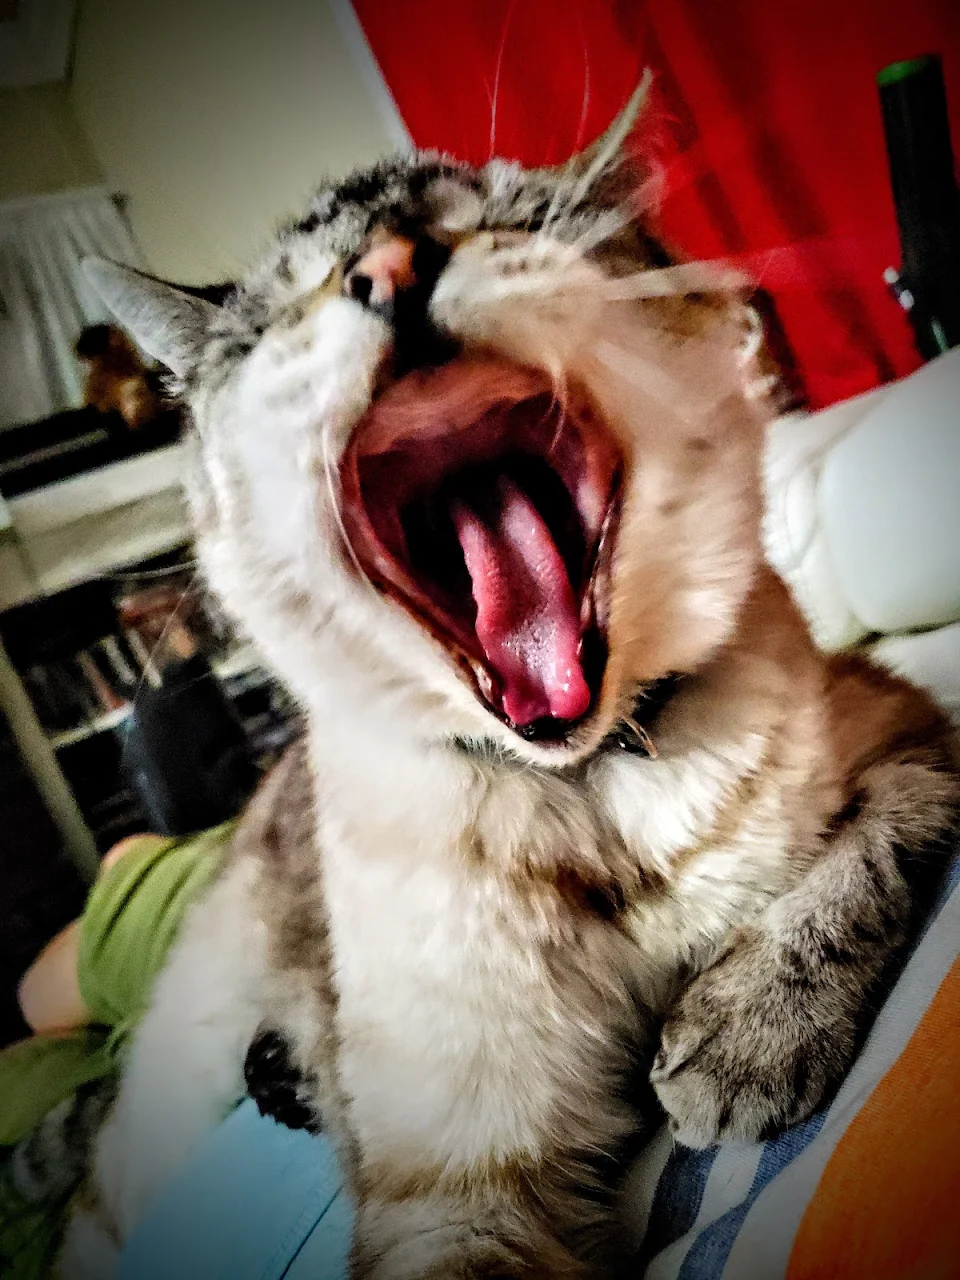 [OC] Caught my toothless boy mid yawn